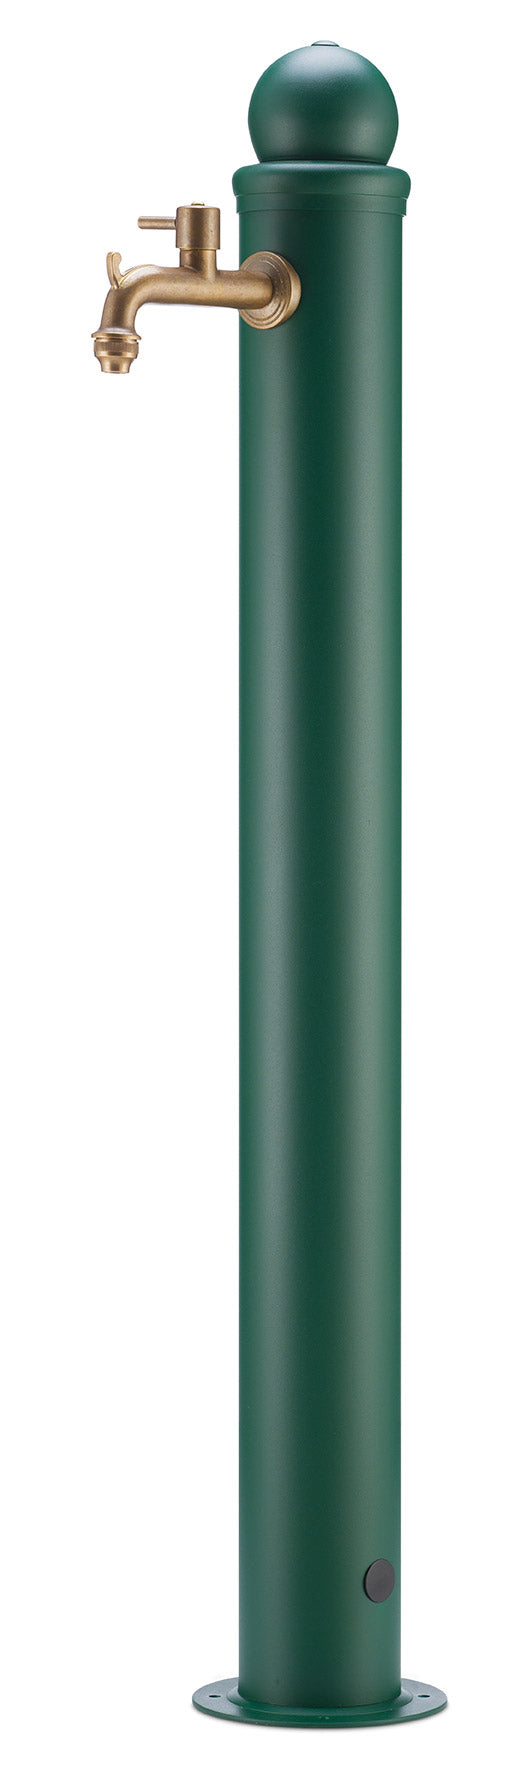 Fontana da Giardino Alta con Rubinetto Belfer 42/ARM Verde-1